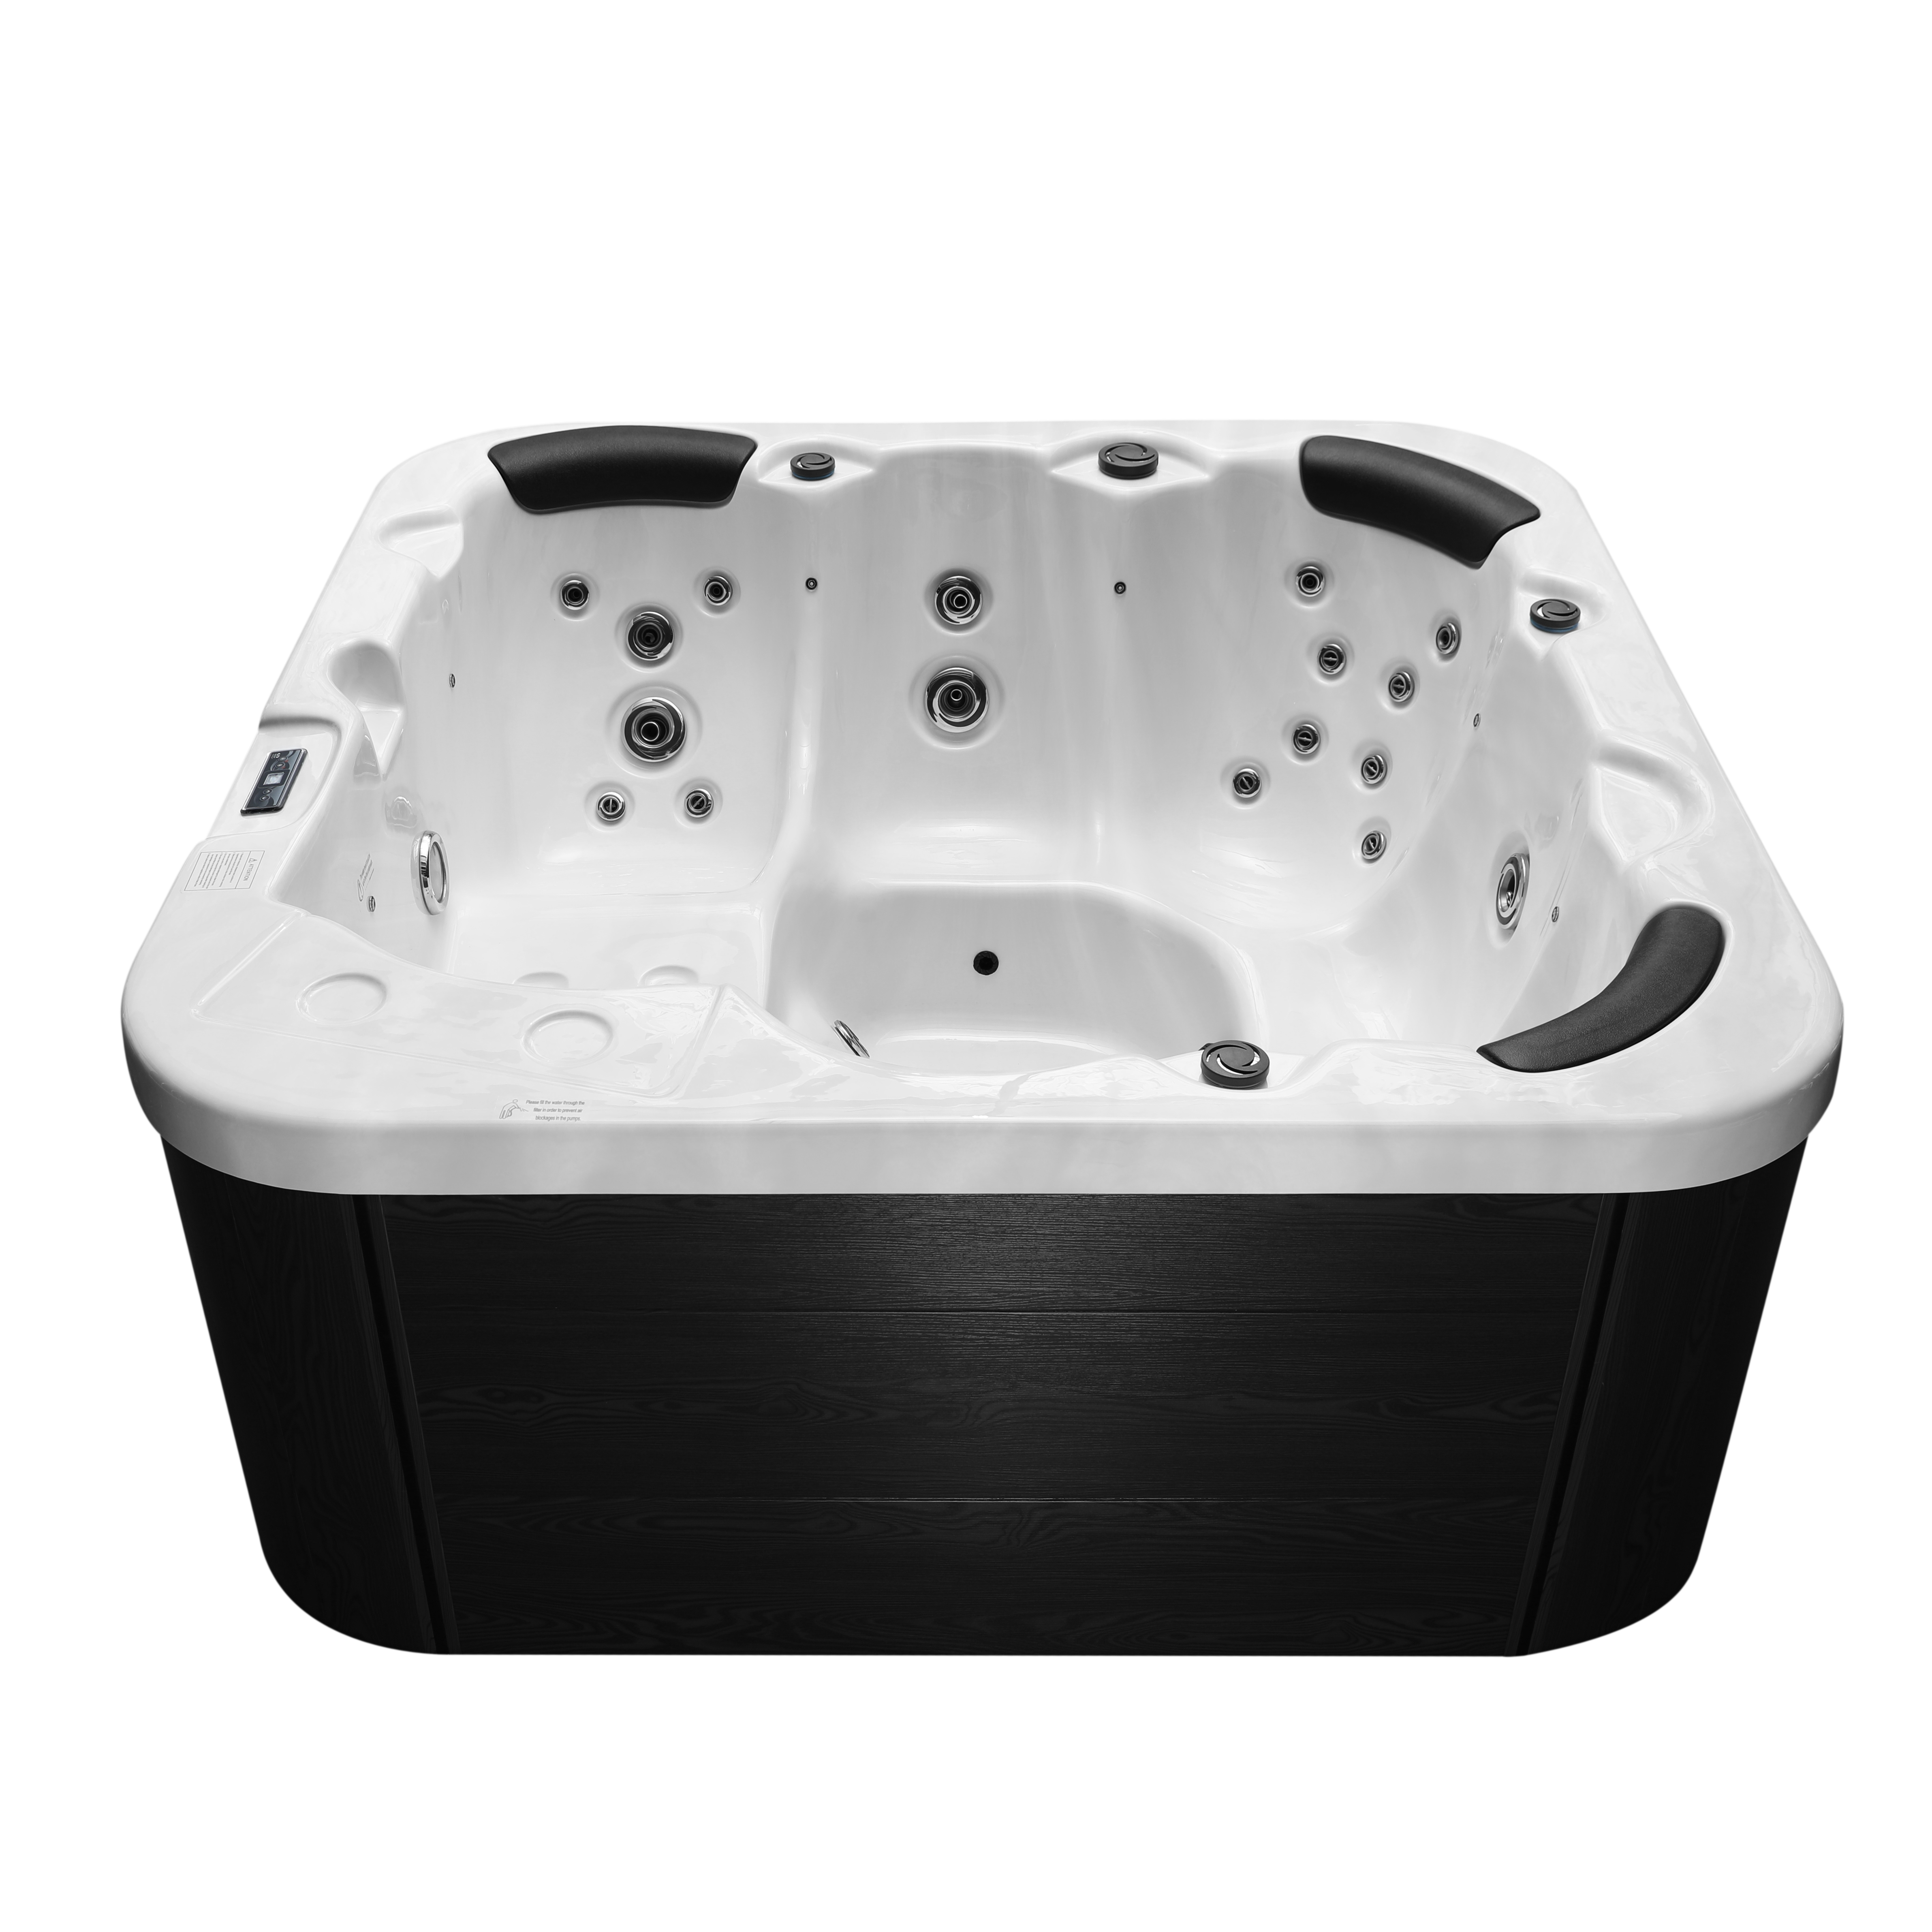 Northern Lights Hybrid Spas - Borealis Electric Square Hot Tub - Hybrid Ready